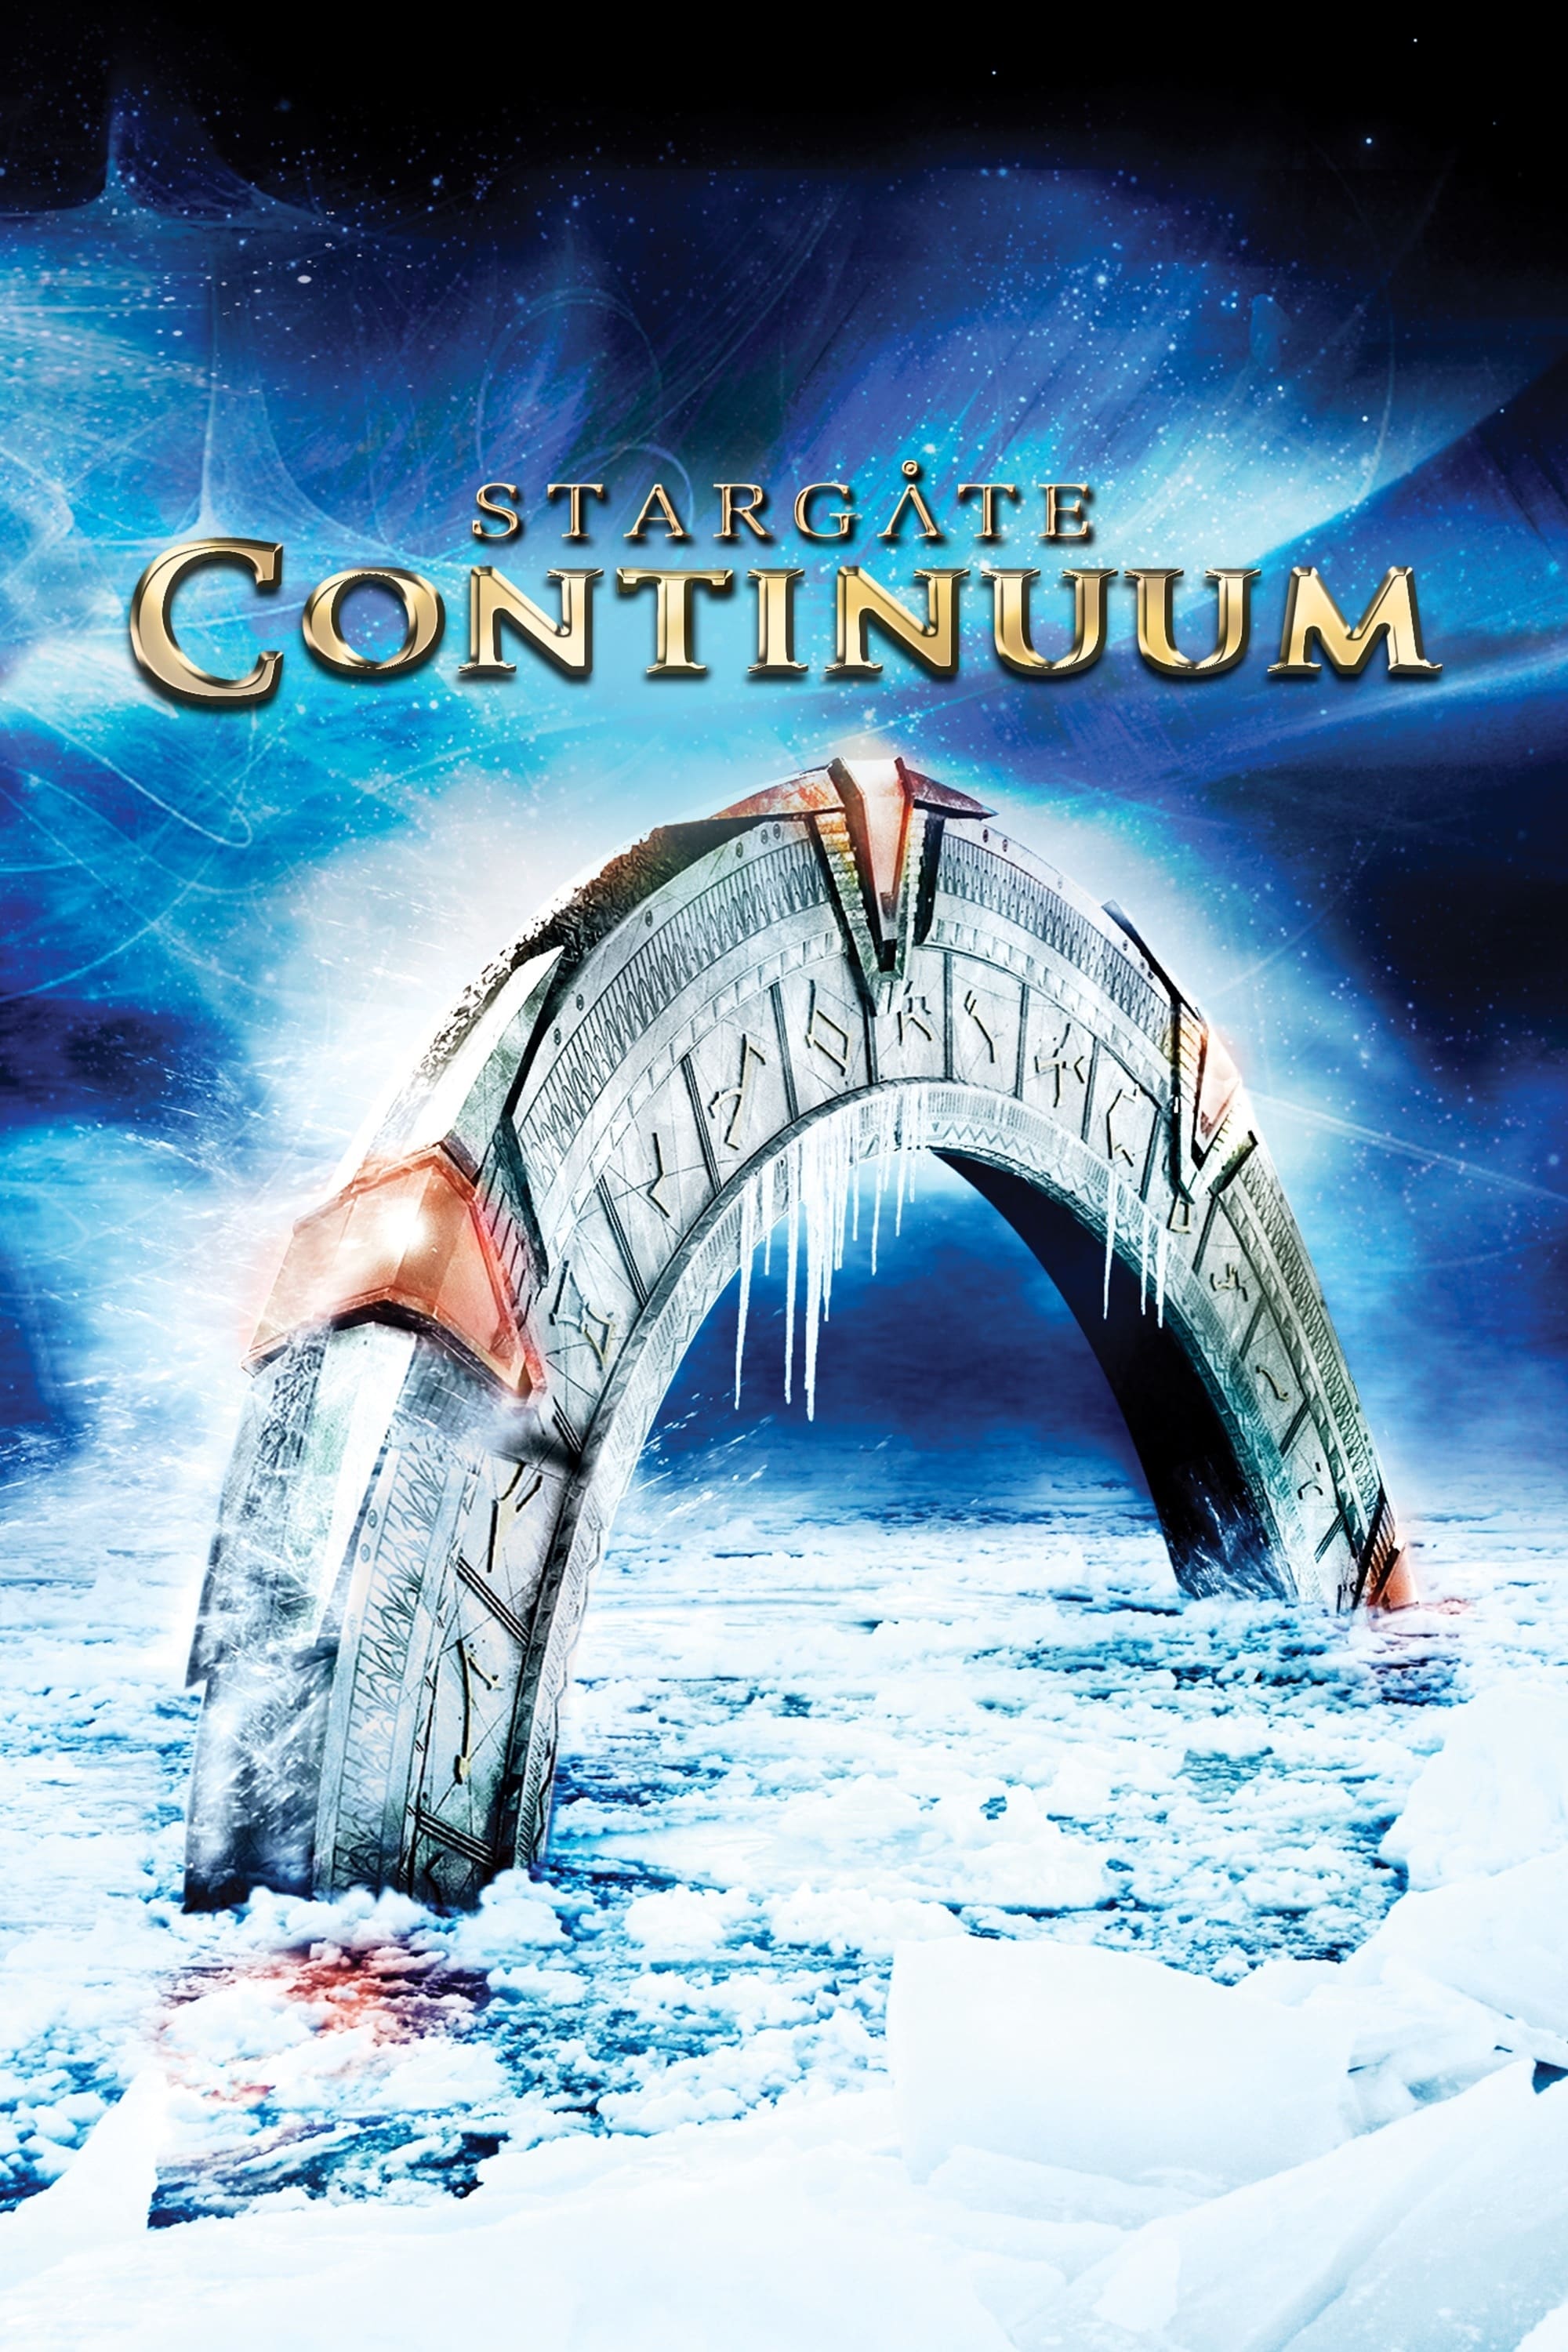 Banner Phim Cổng Trời (Stargate: Continuum)